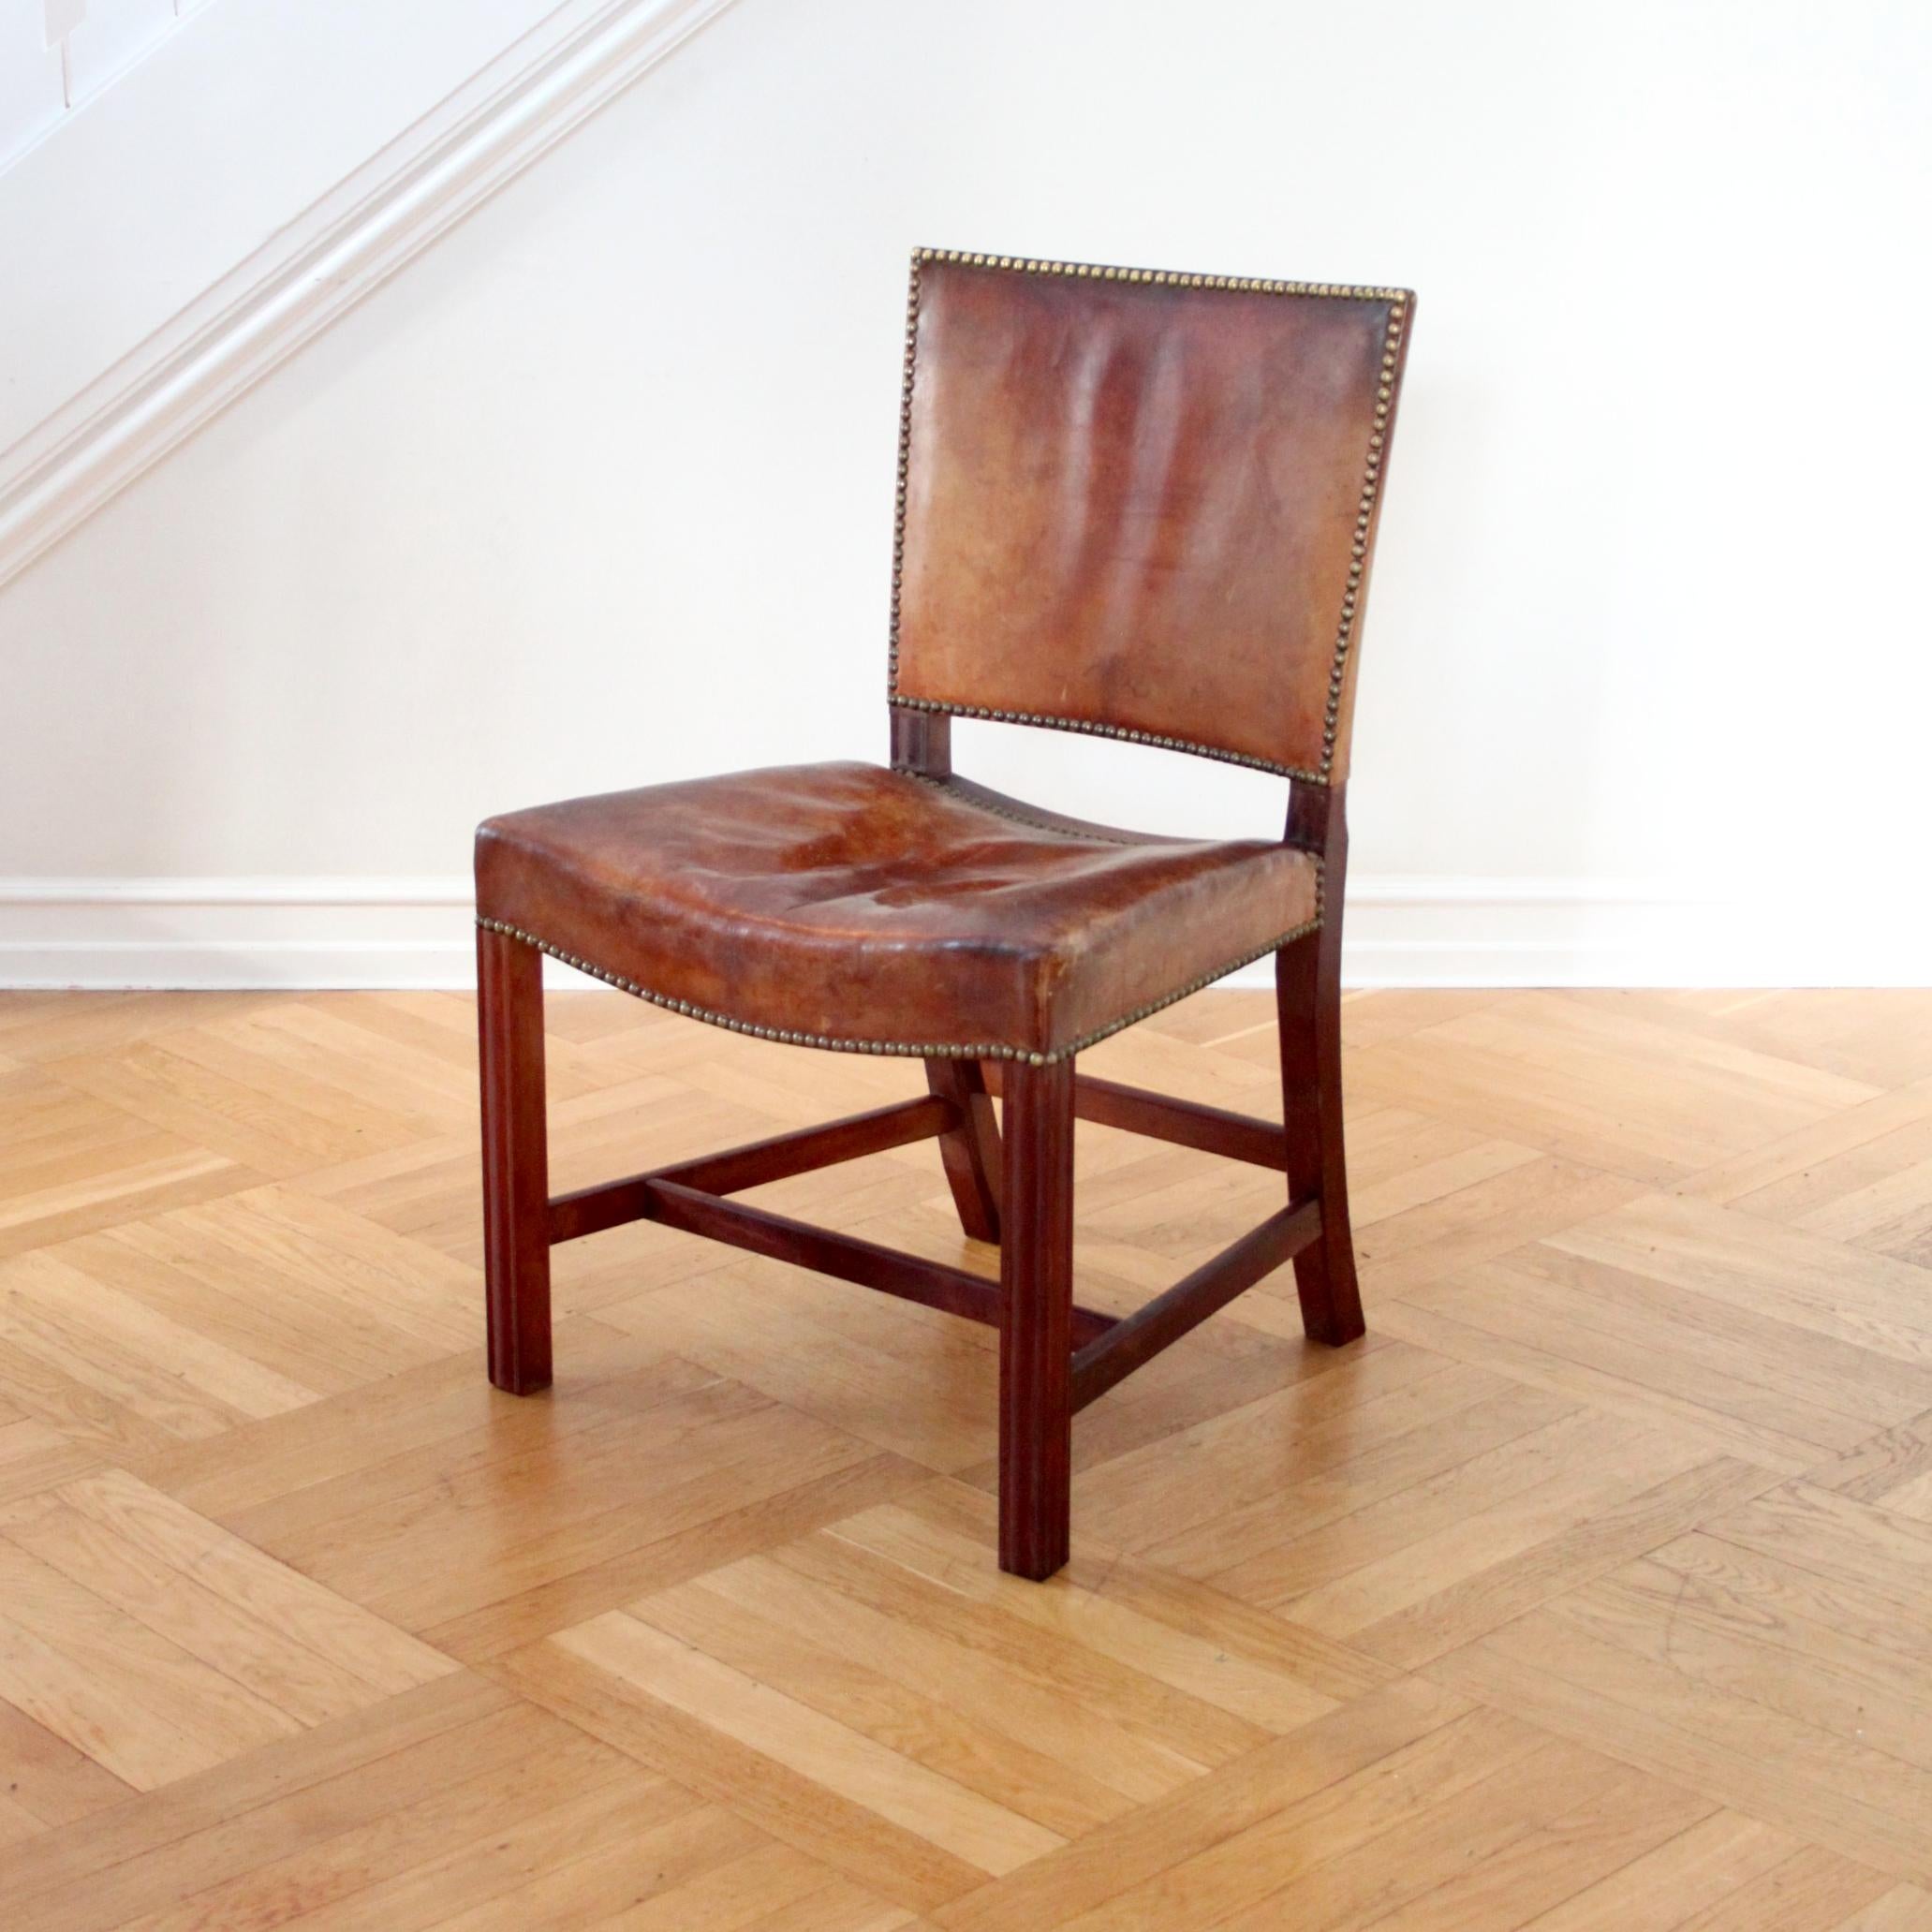 Kaare Klint Roter Stuhl, Rud Rasmussen, Original Niger Leder und Mahagoni-Rahmen (Skandinavische Moderne) im Angebot